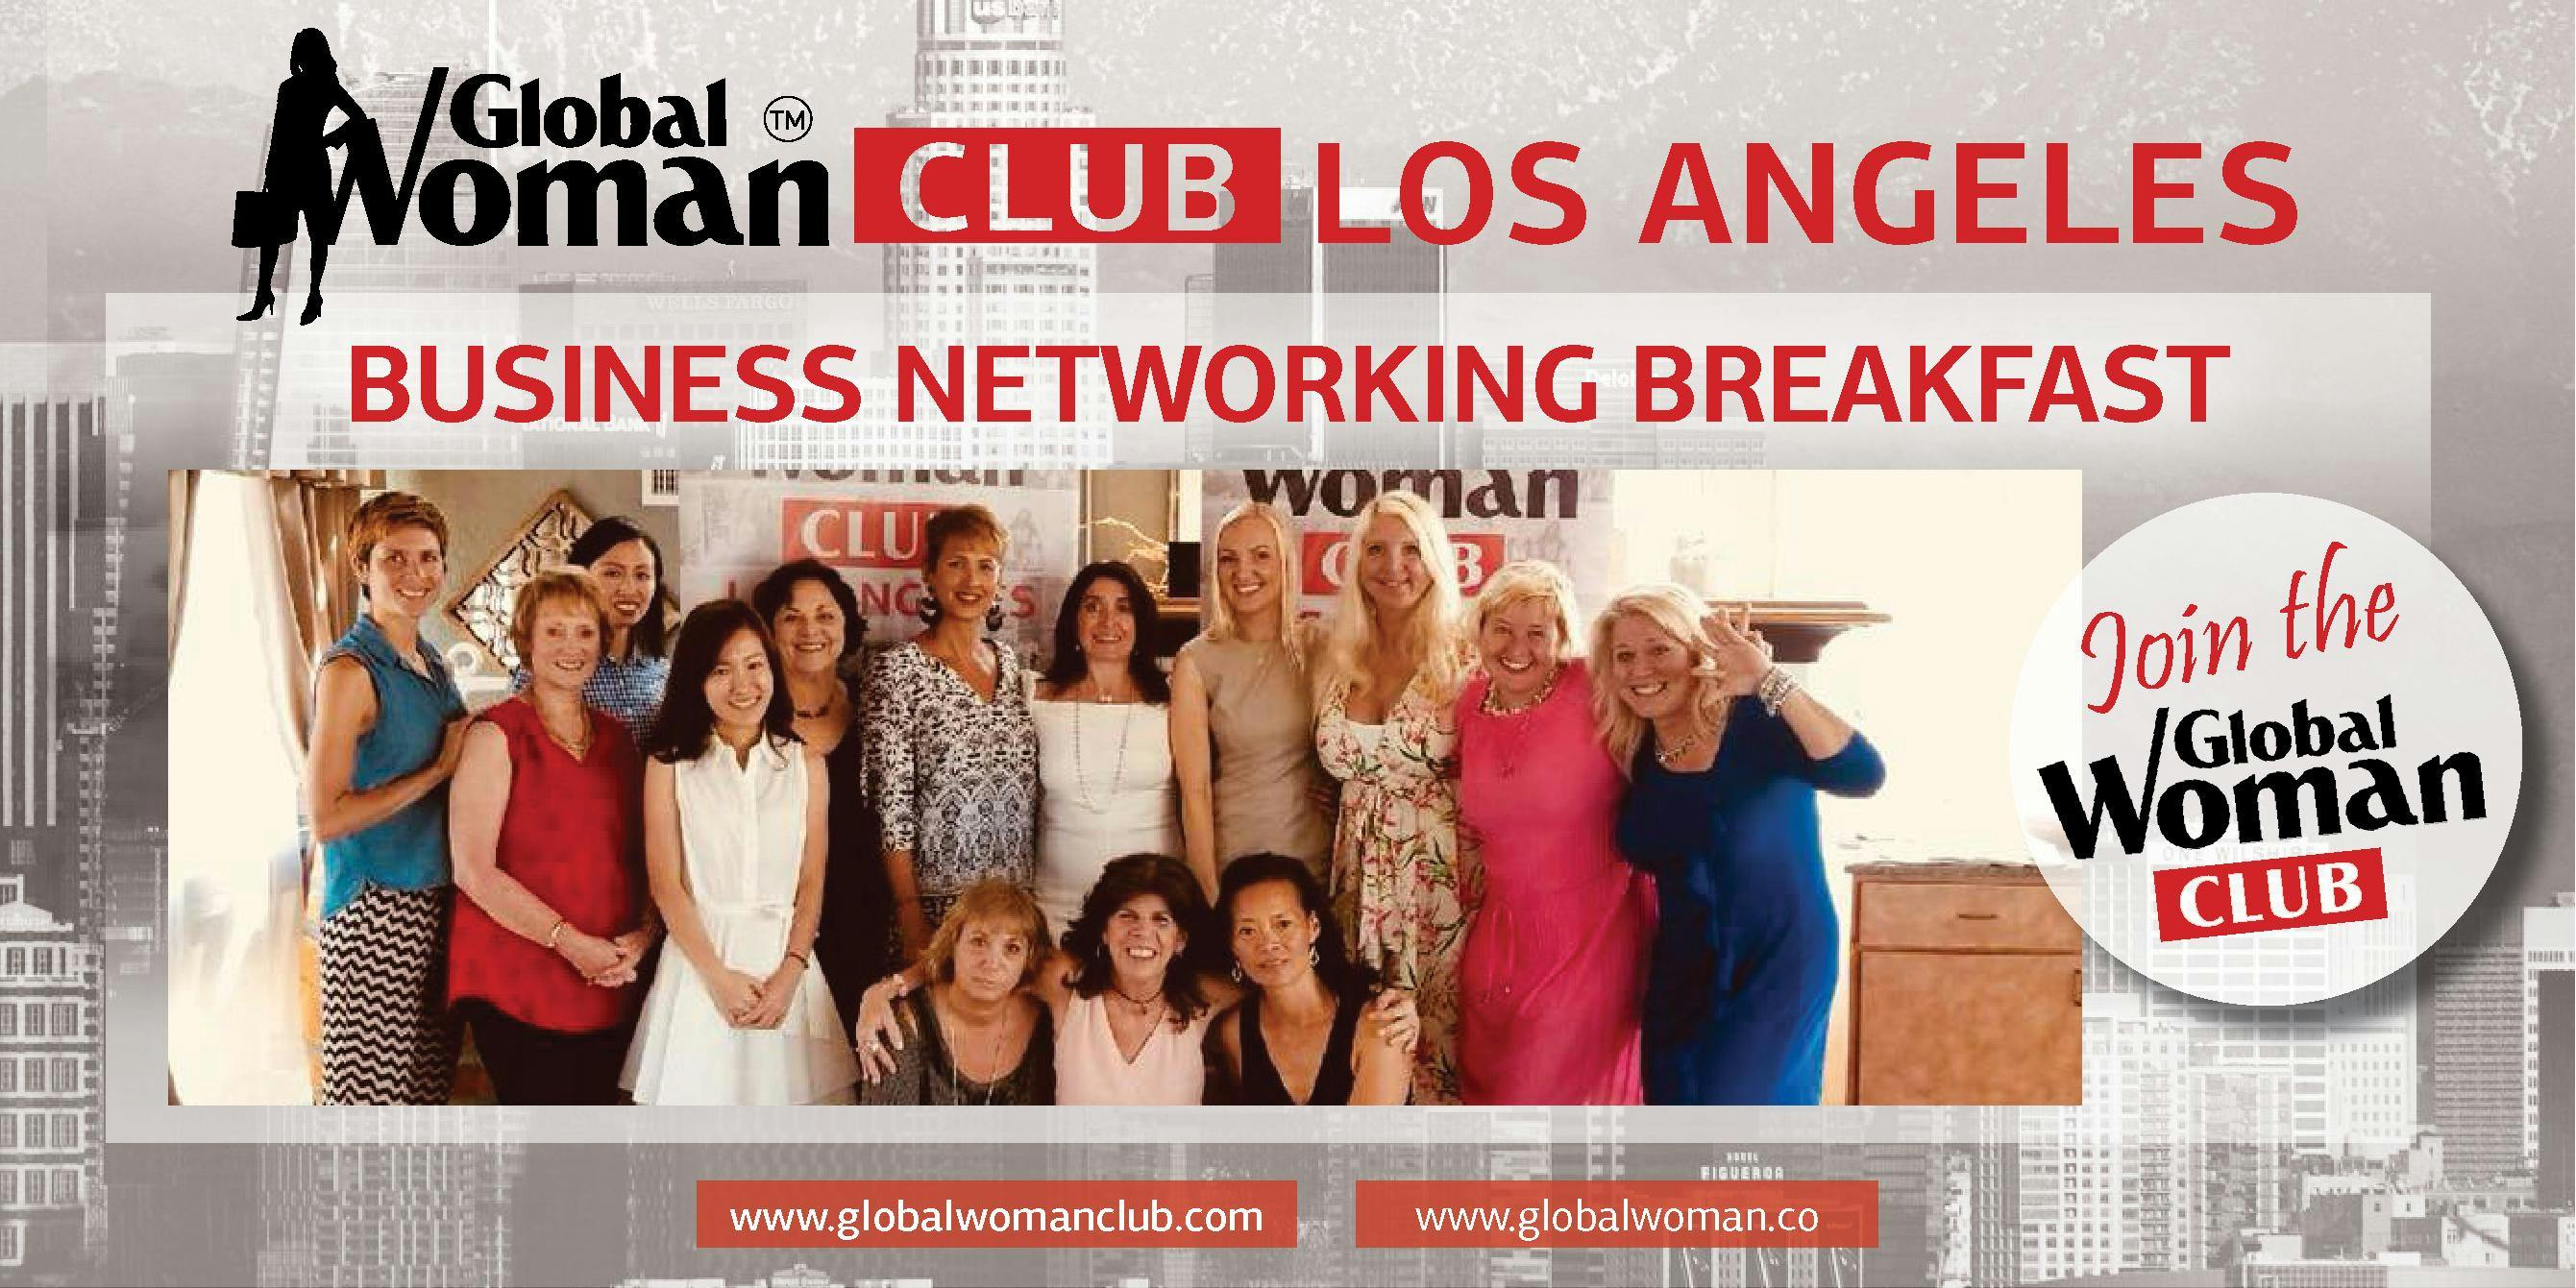 GLOBAL WOMAN CLUB LOS ANGELES: BUSINESS NETWORKING BREAKFAST - SEPTEMBER